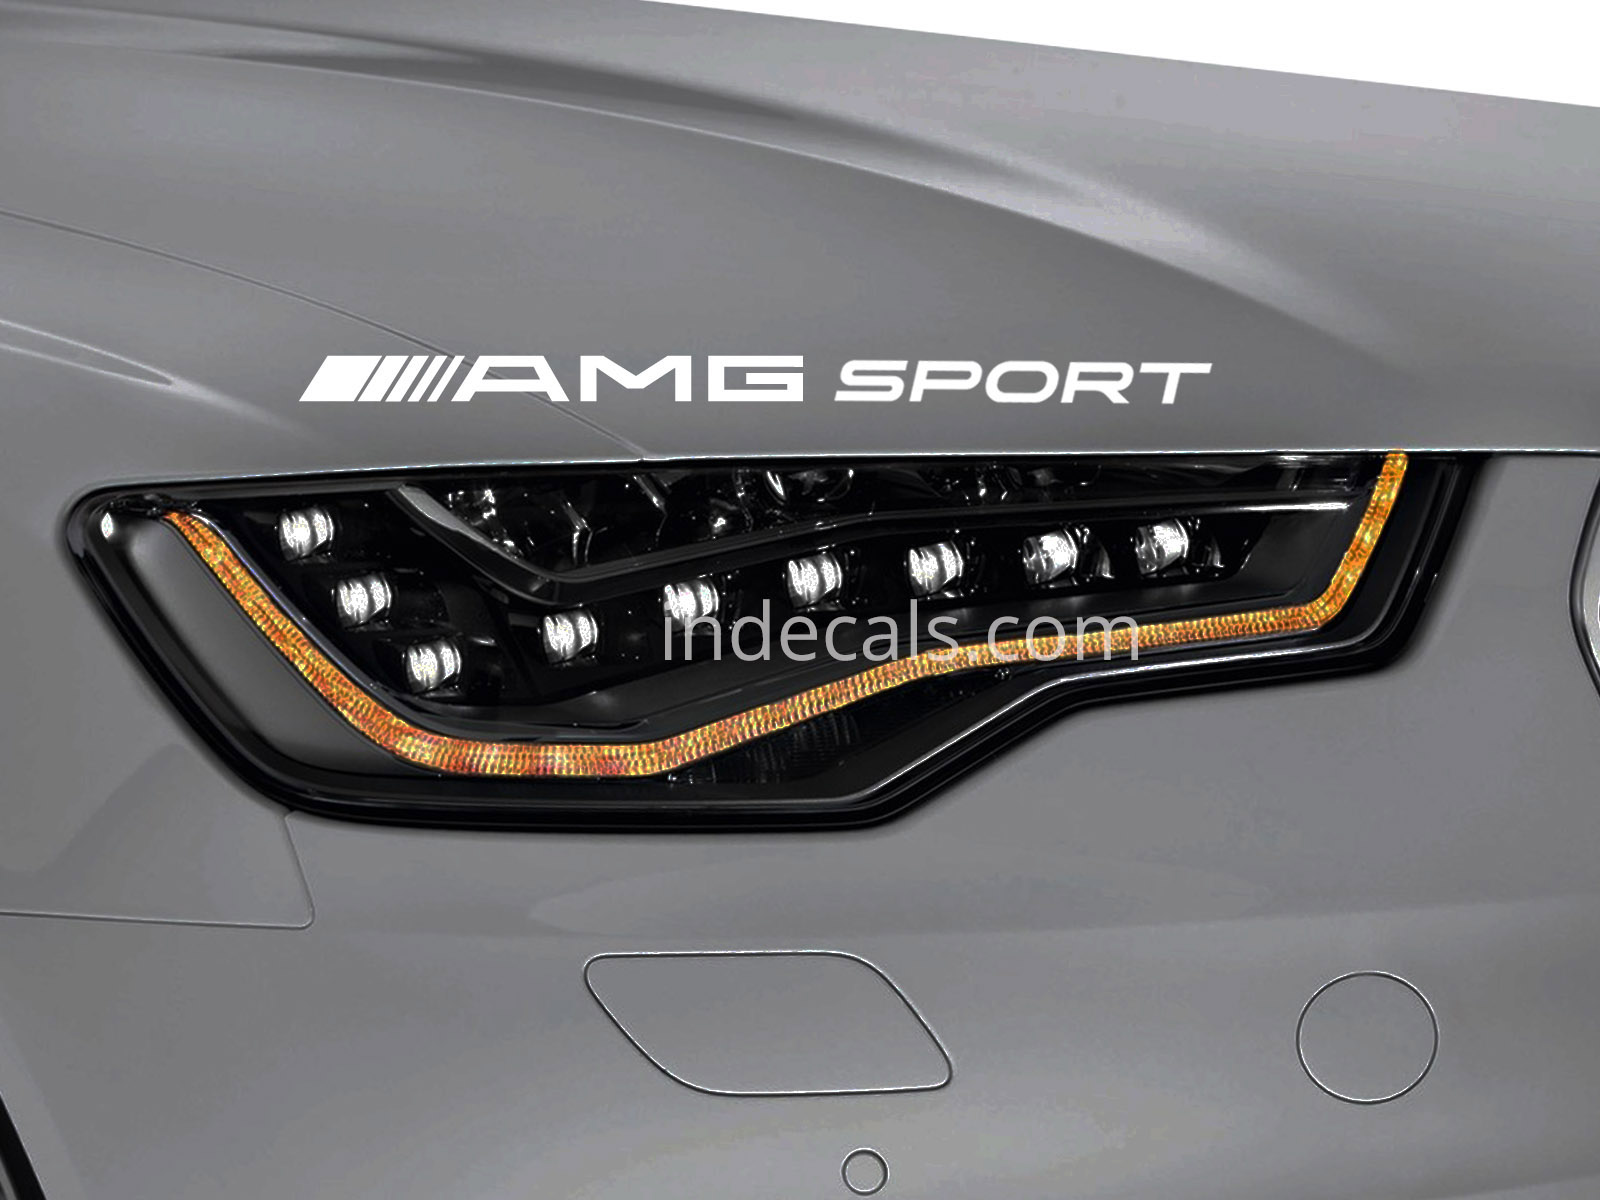 1 x AMG Sport Sticker for Eyebrow - White